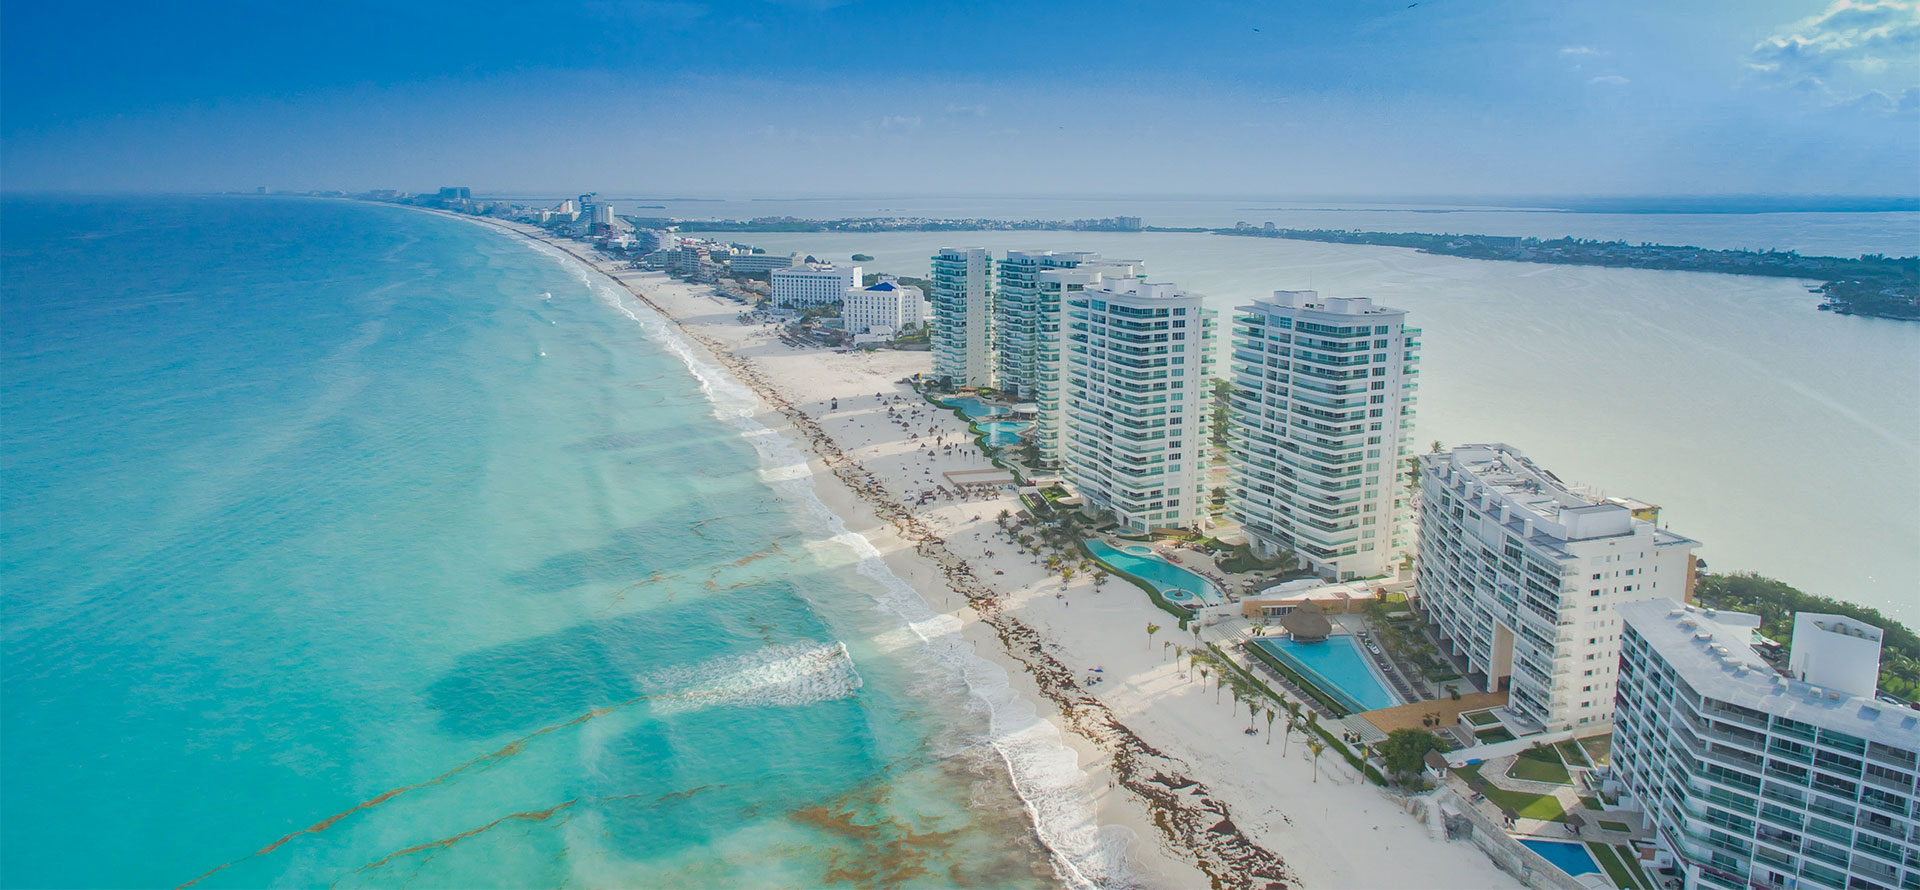 Cancun honeymoon resorts landscape photo.